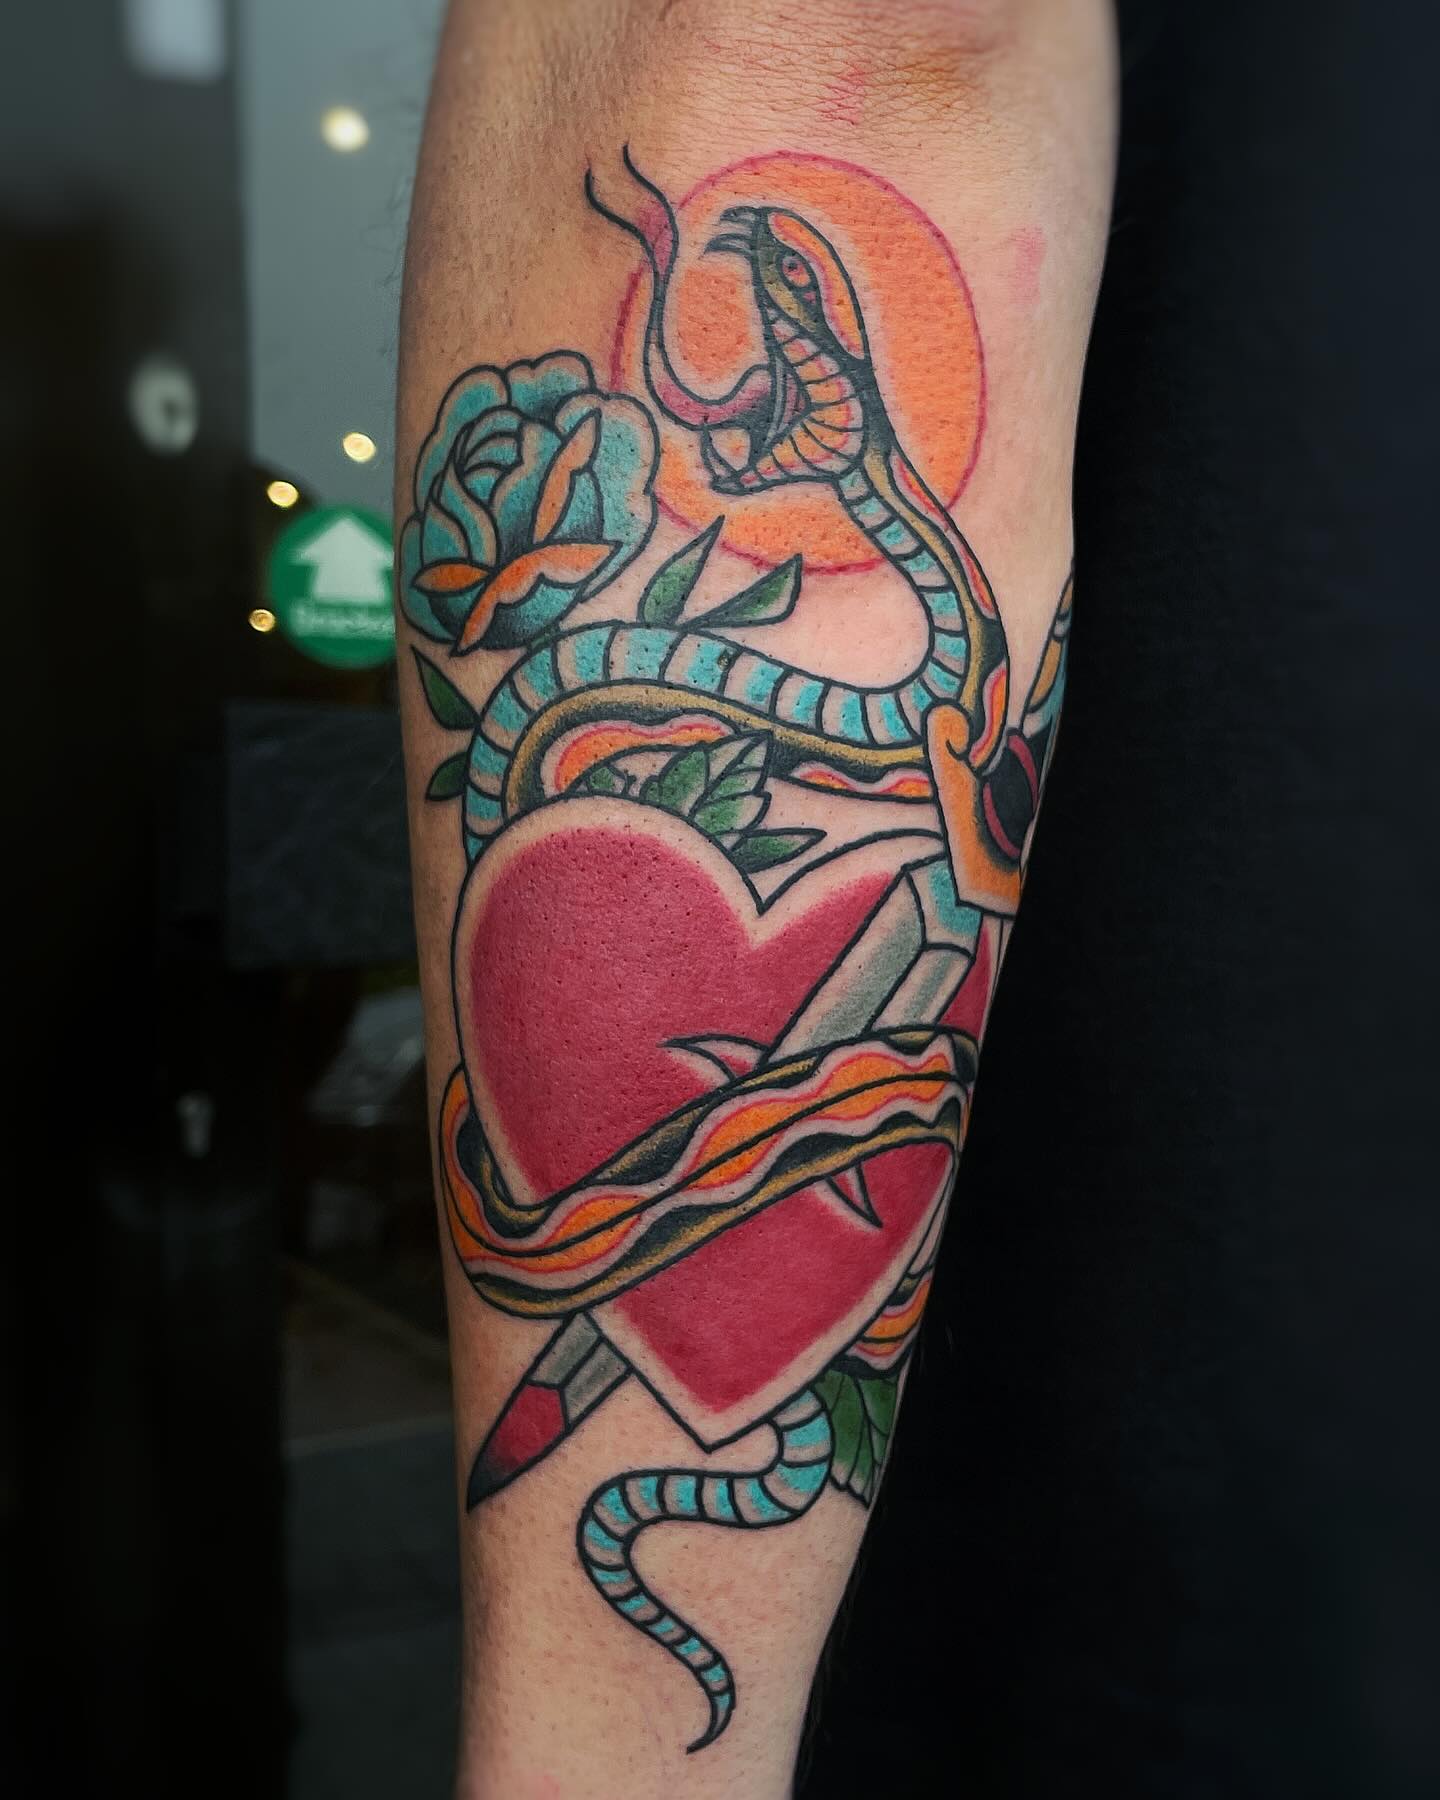 Danke Jörg für den lustigen Tattootag…….
.
.
.
.
.
#TattooArt #TattooDesign
#Sna